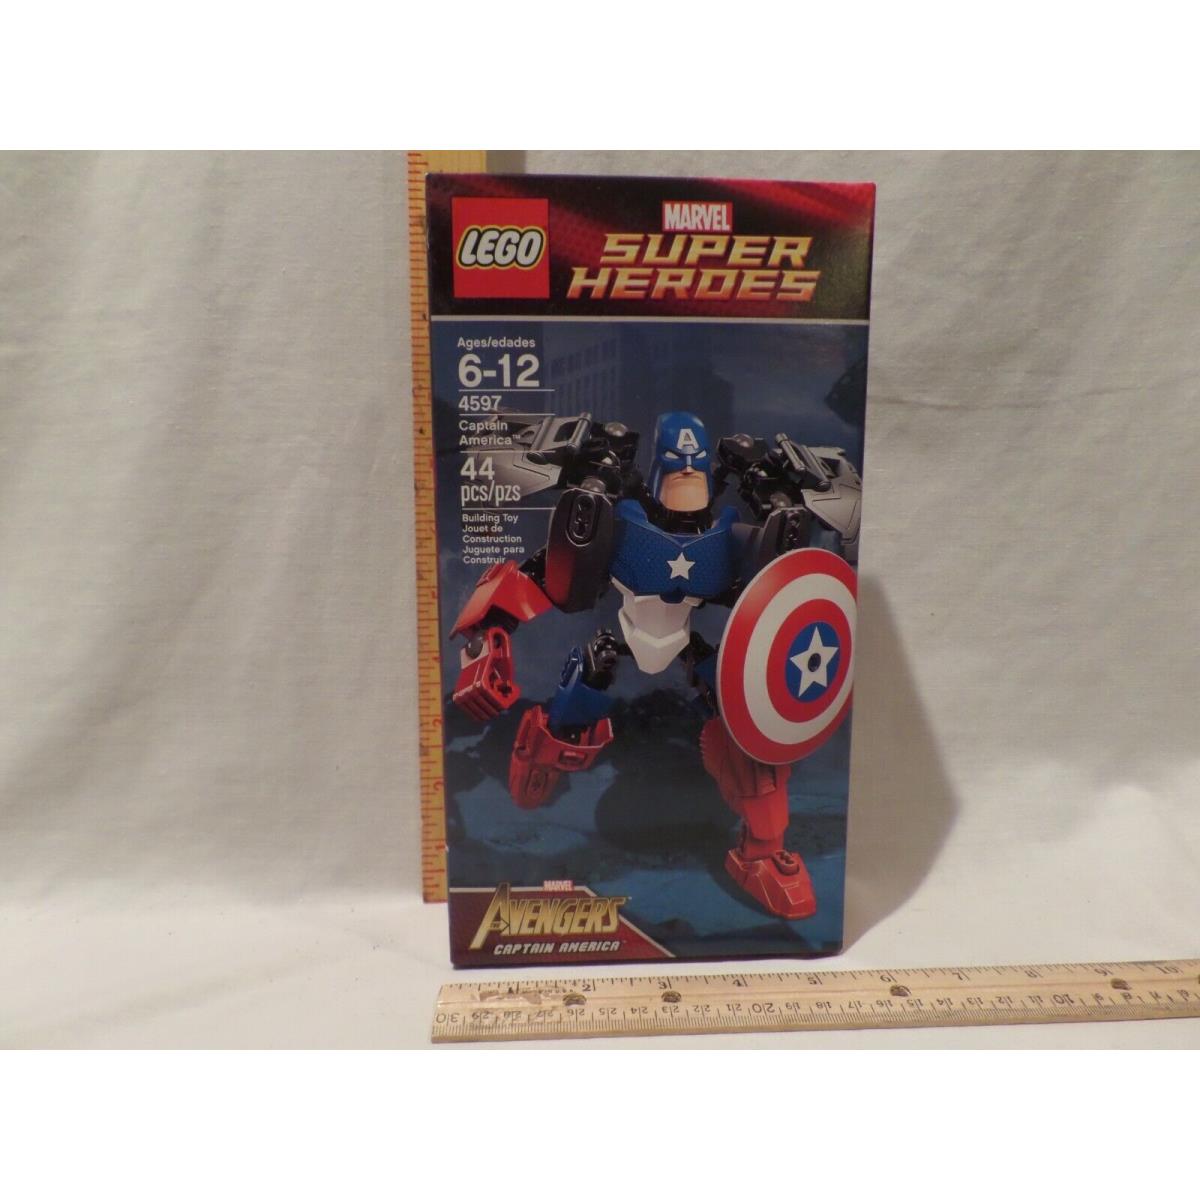 Lego Marvel Super Heroes: Captain America 4597 21042